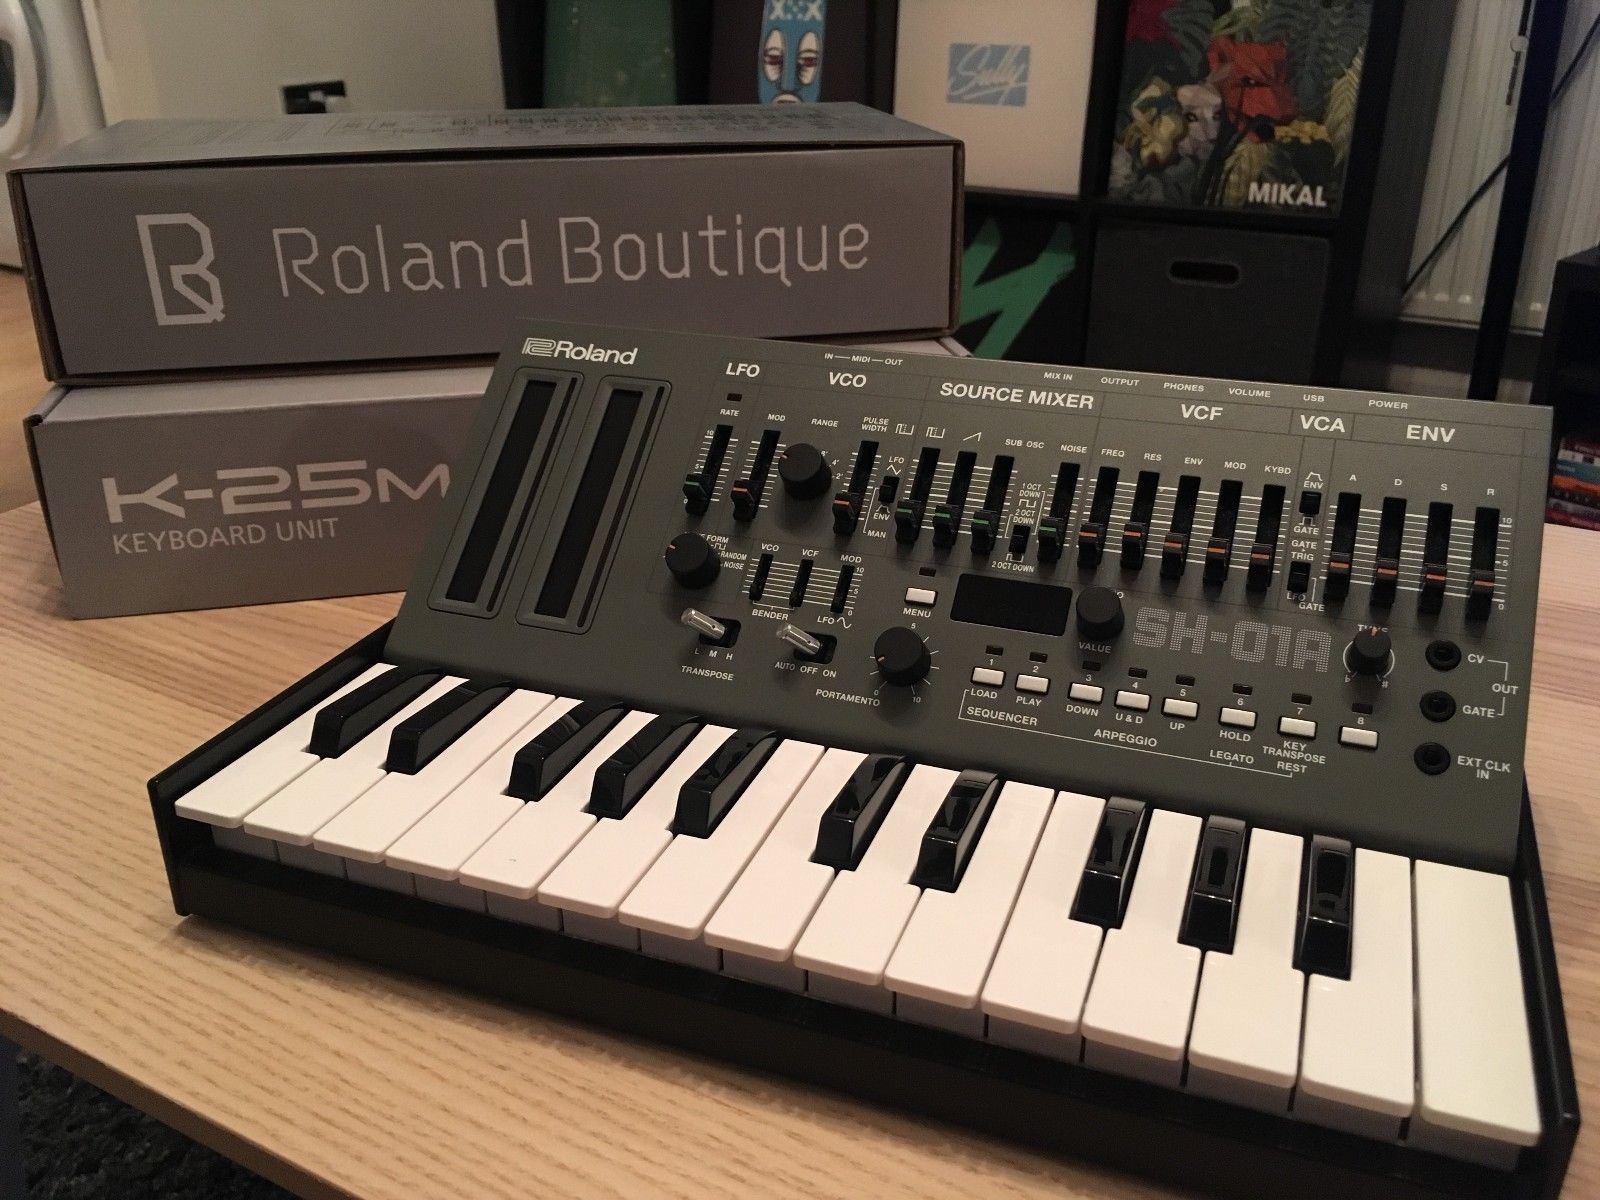 MATRIXSYNTH: Roland Boutique SH-01A Synth (Grey) & K25M Keyboard Unit